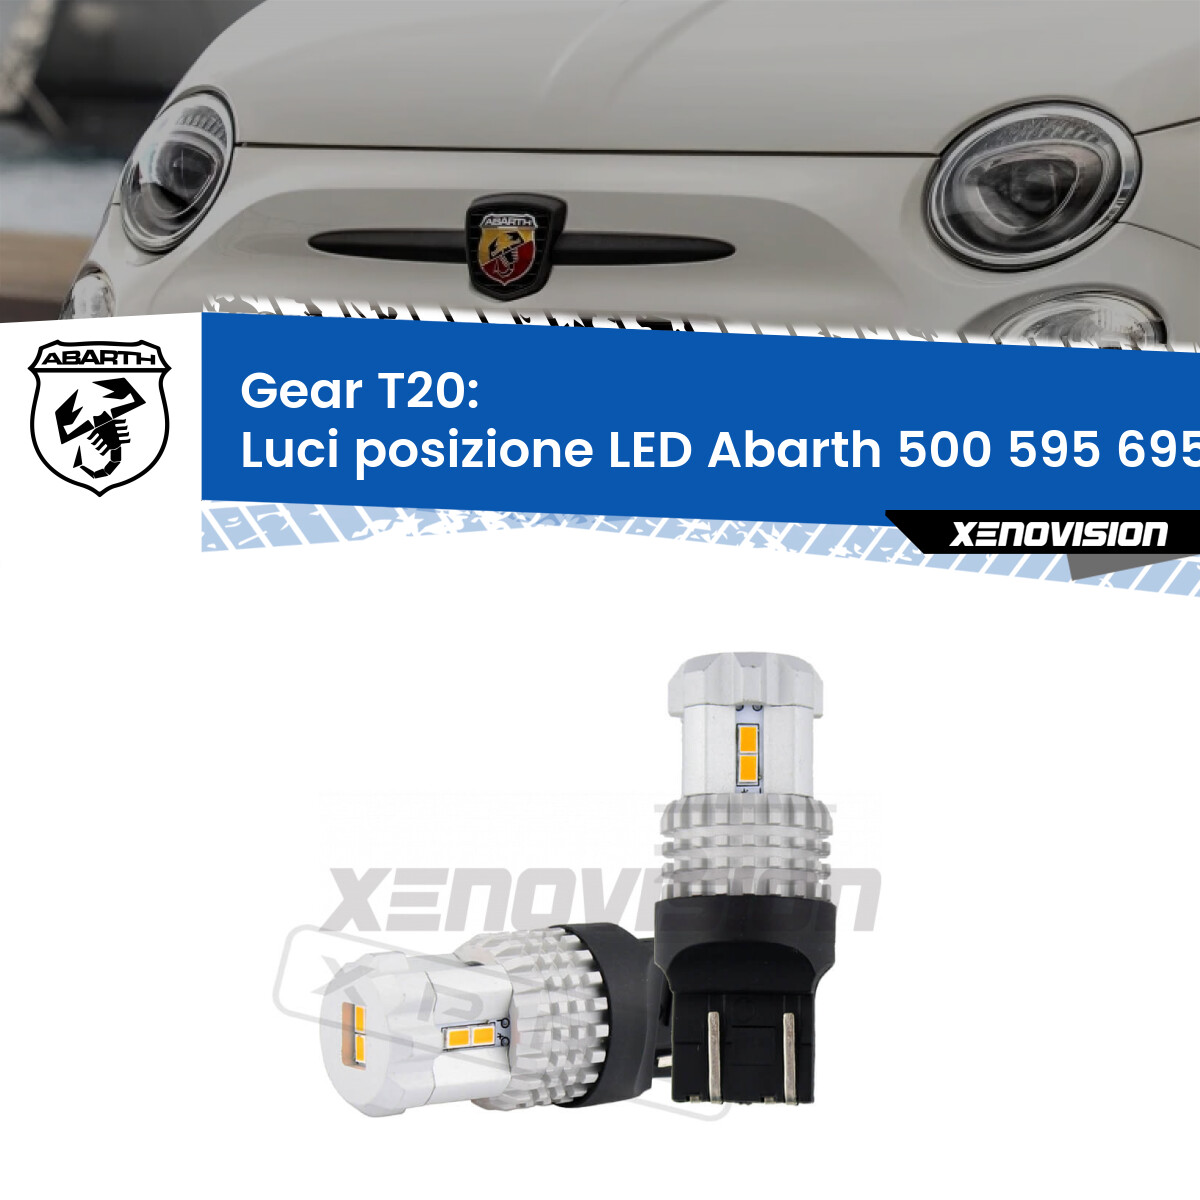 Luci posizione LED Abarth 500 595 695 2008-2014: T20 Gear